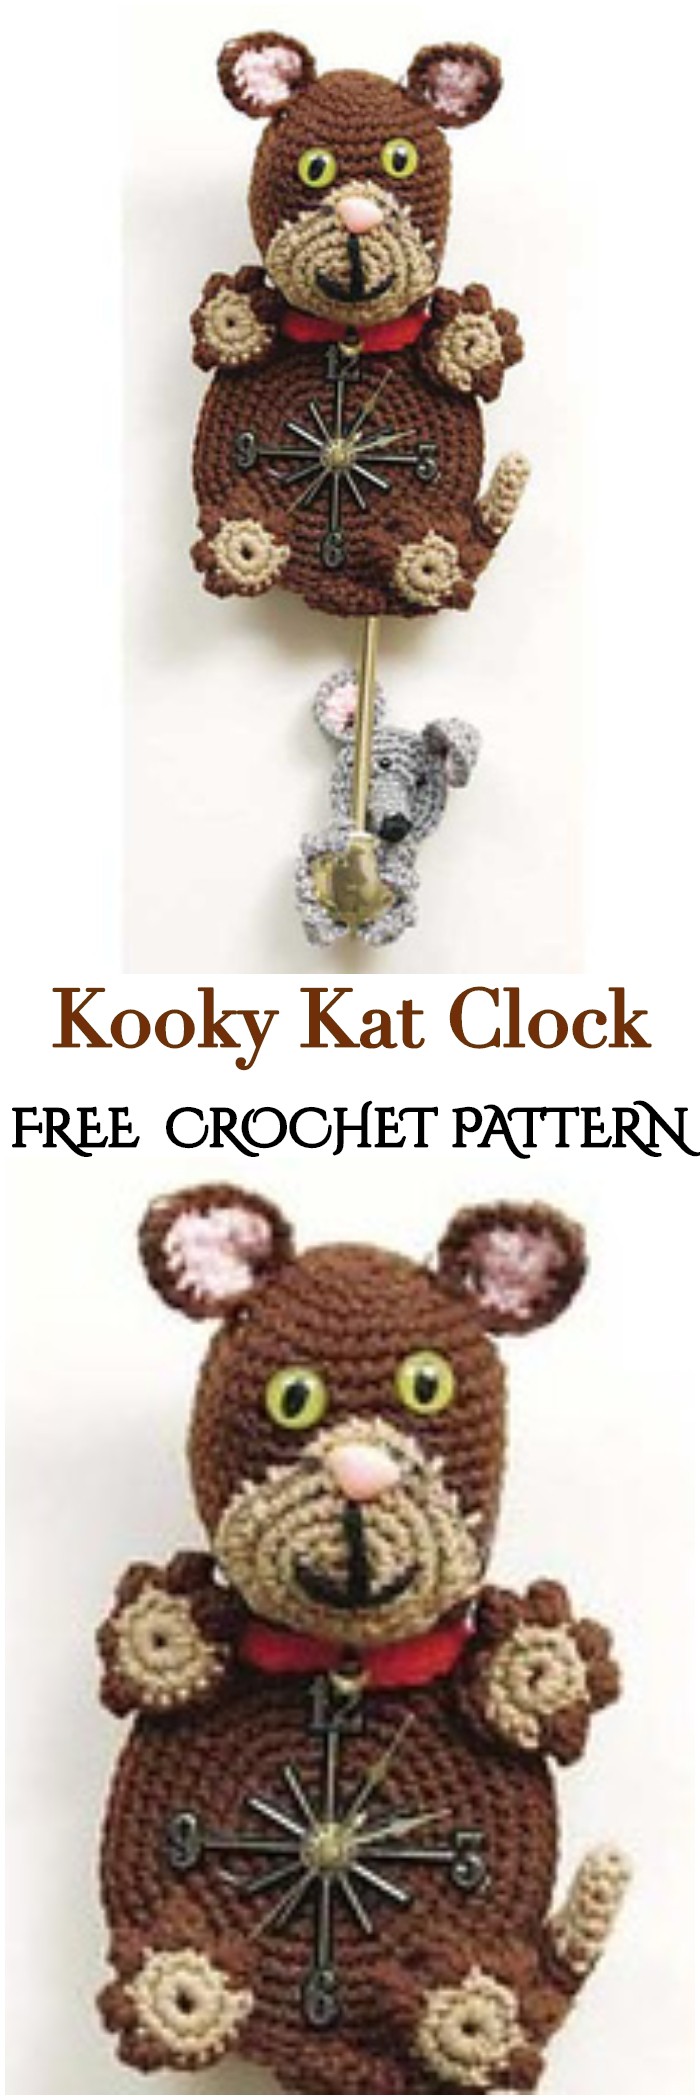 Crochet Kooky Kat Clock